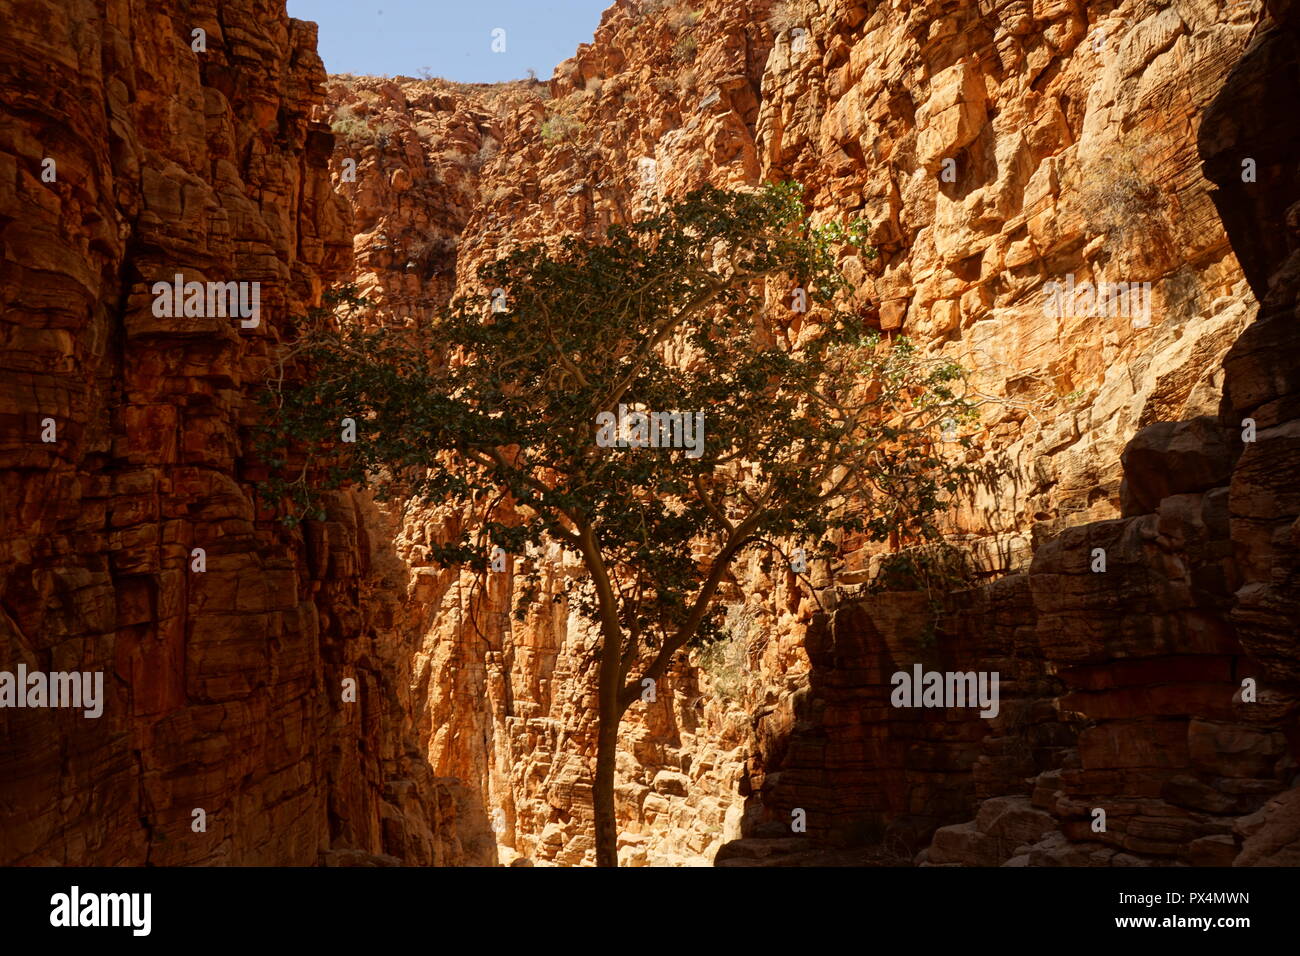 Baum in einer Schlucht, OliveTrail, Naukluft Gebirge, Parco Namib-Naukluft, Namibia, Afrika / Namib-Naukluft National Park Foto Stock